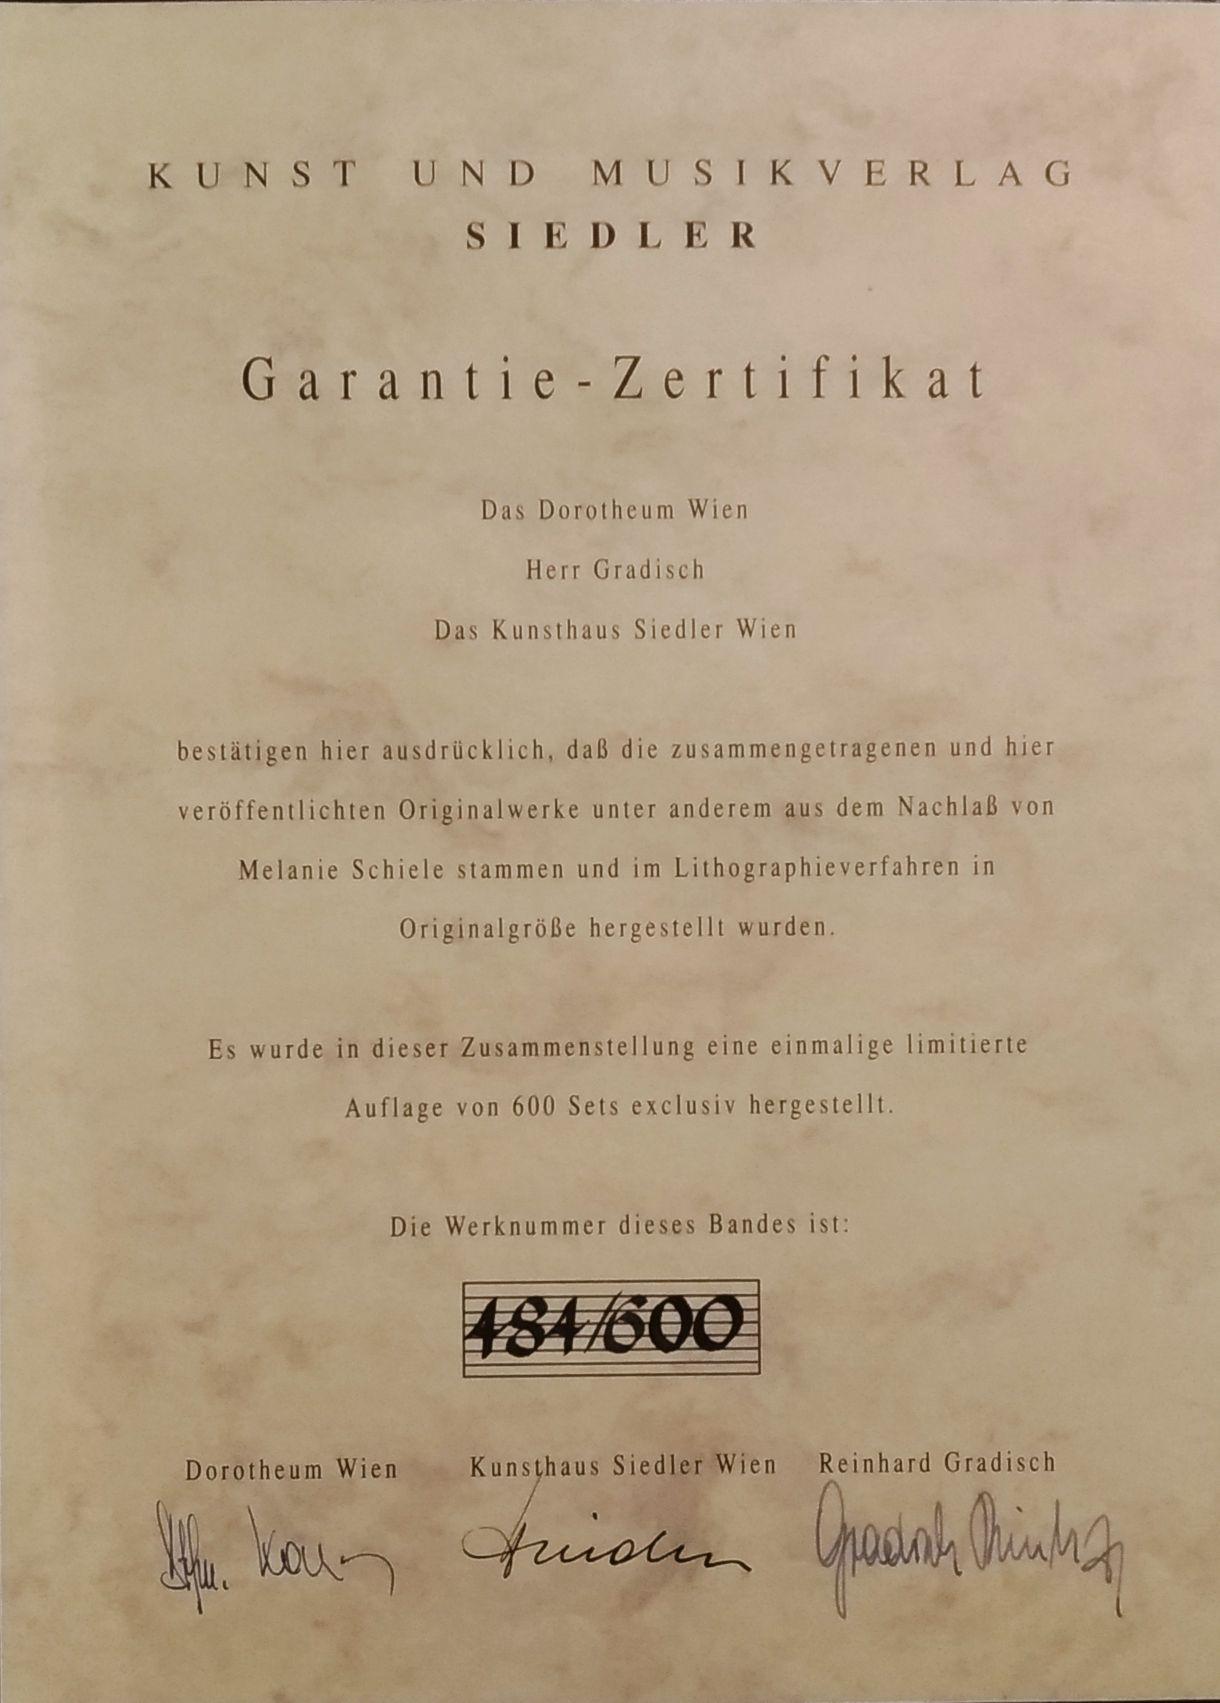 Weiblicher Rückenakt - Original Lithograph after Egon Schiele - Modern Print by (after) Egon Schiele